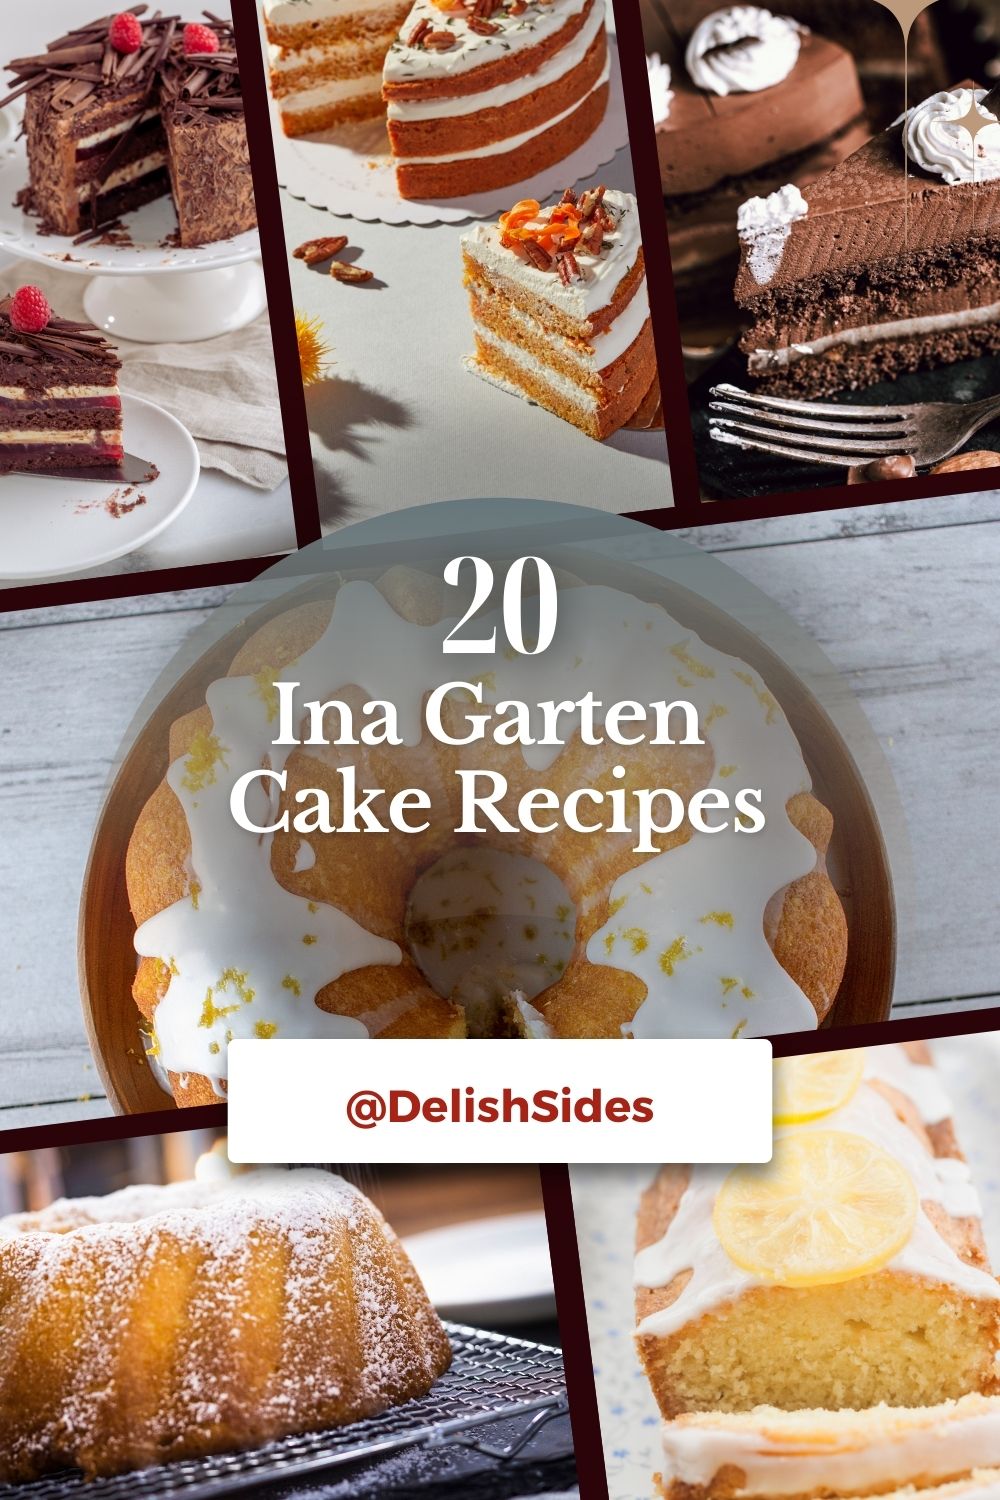 20 Ina Garten Cake Recipes - Delish Sides